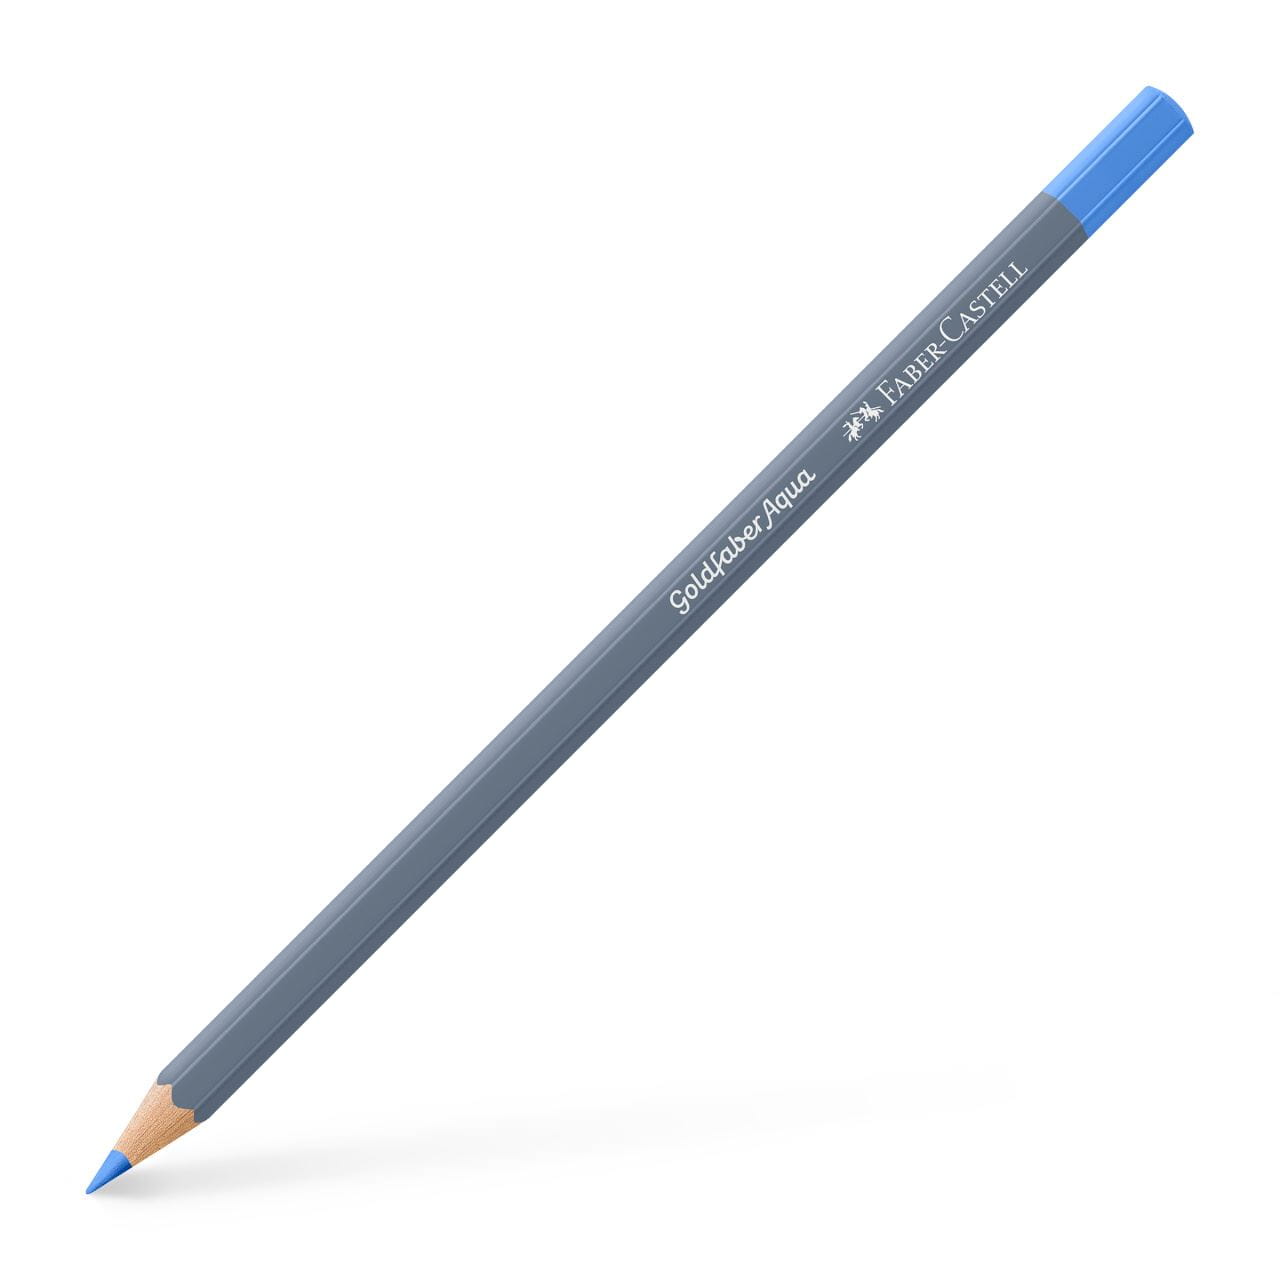 Faber-Castell - Crayon Goldfaber Aqua ultramarine clair